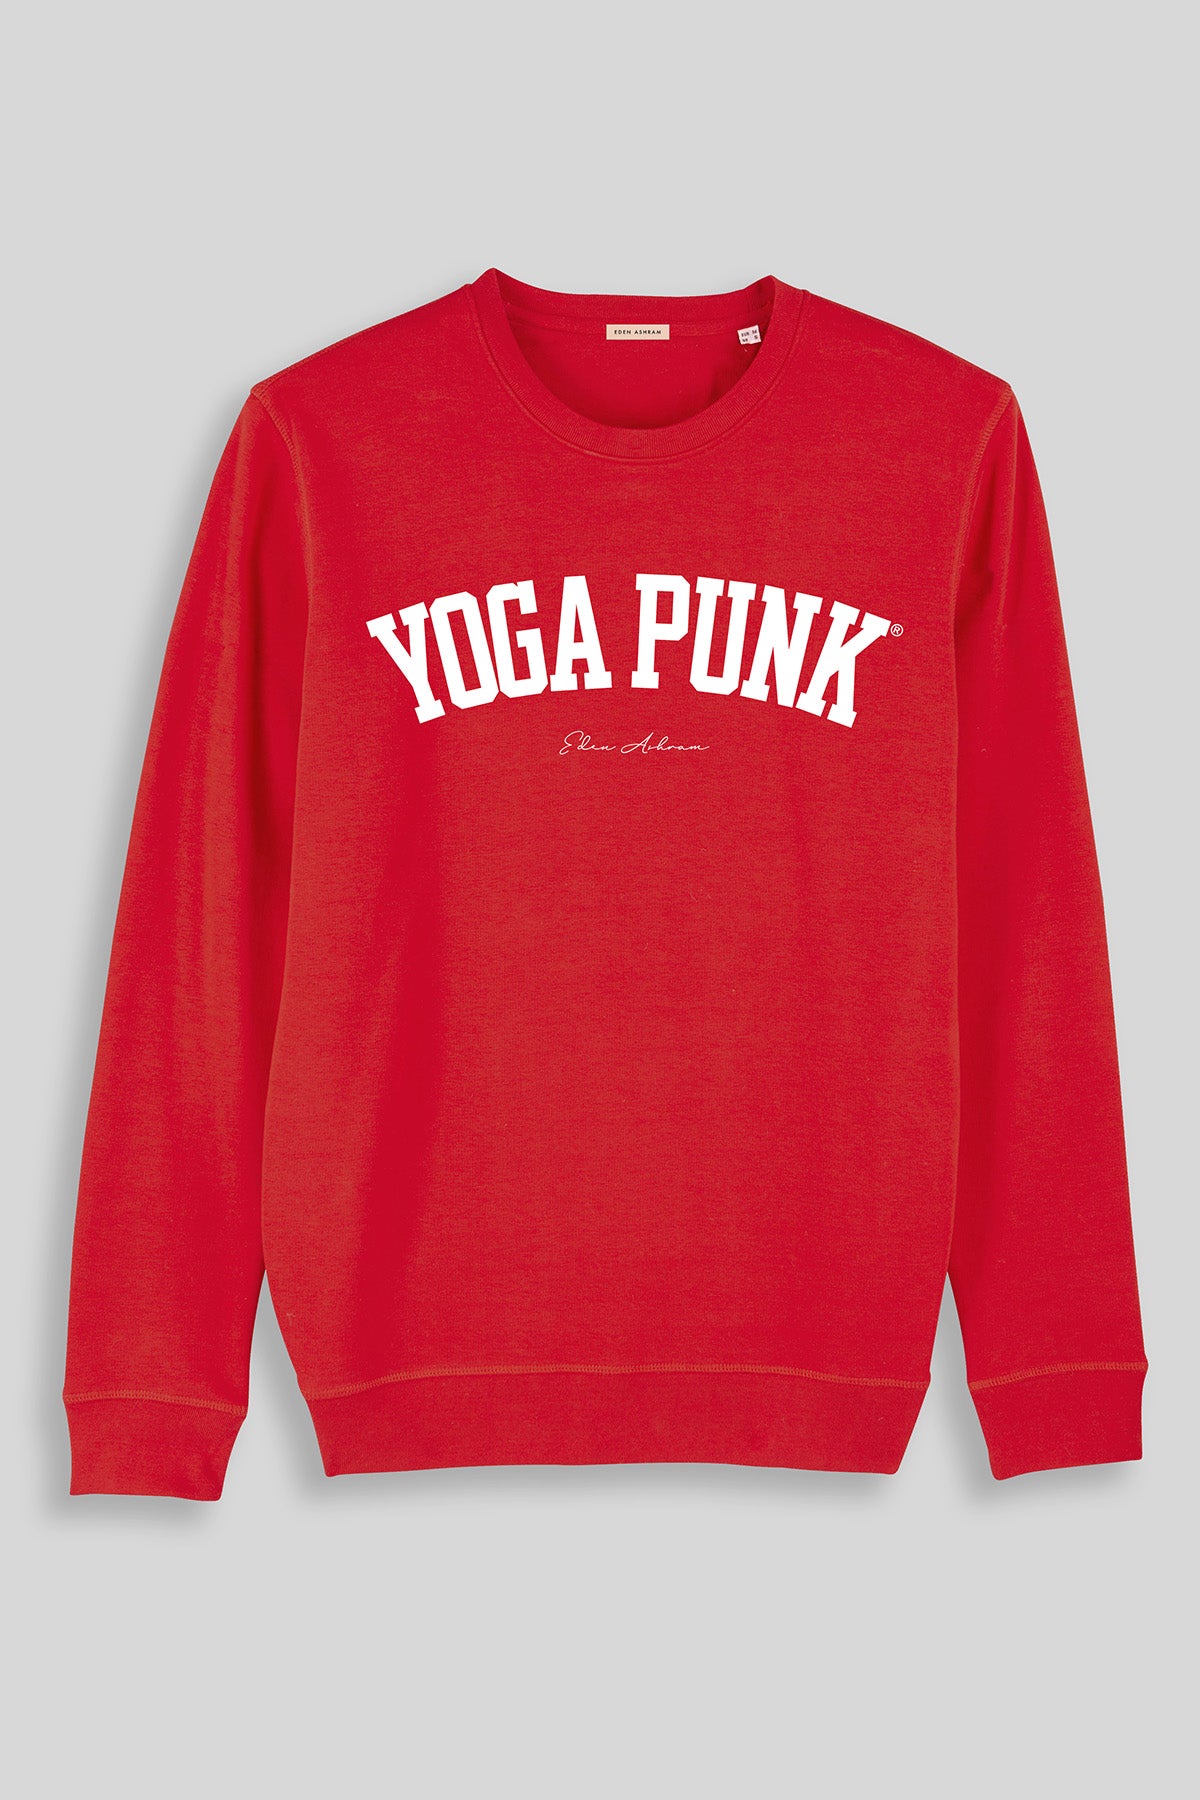 EDEN ASHRAM Yoga Punk Varsity Organic Sweatshirt - Red Red